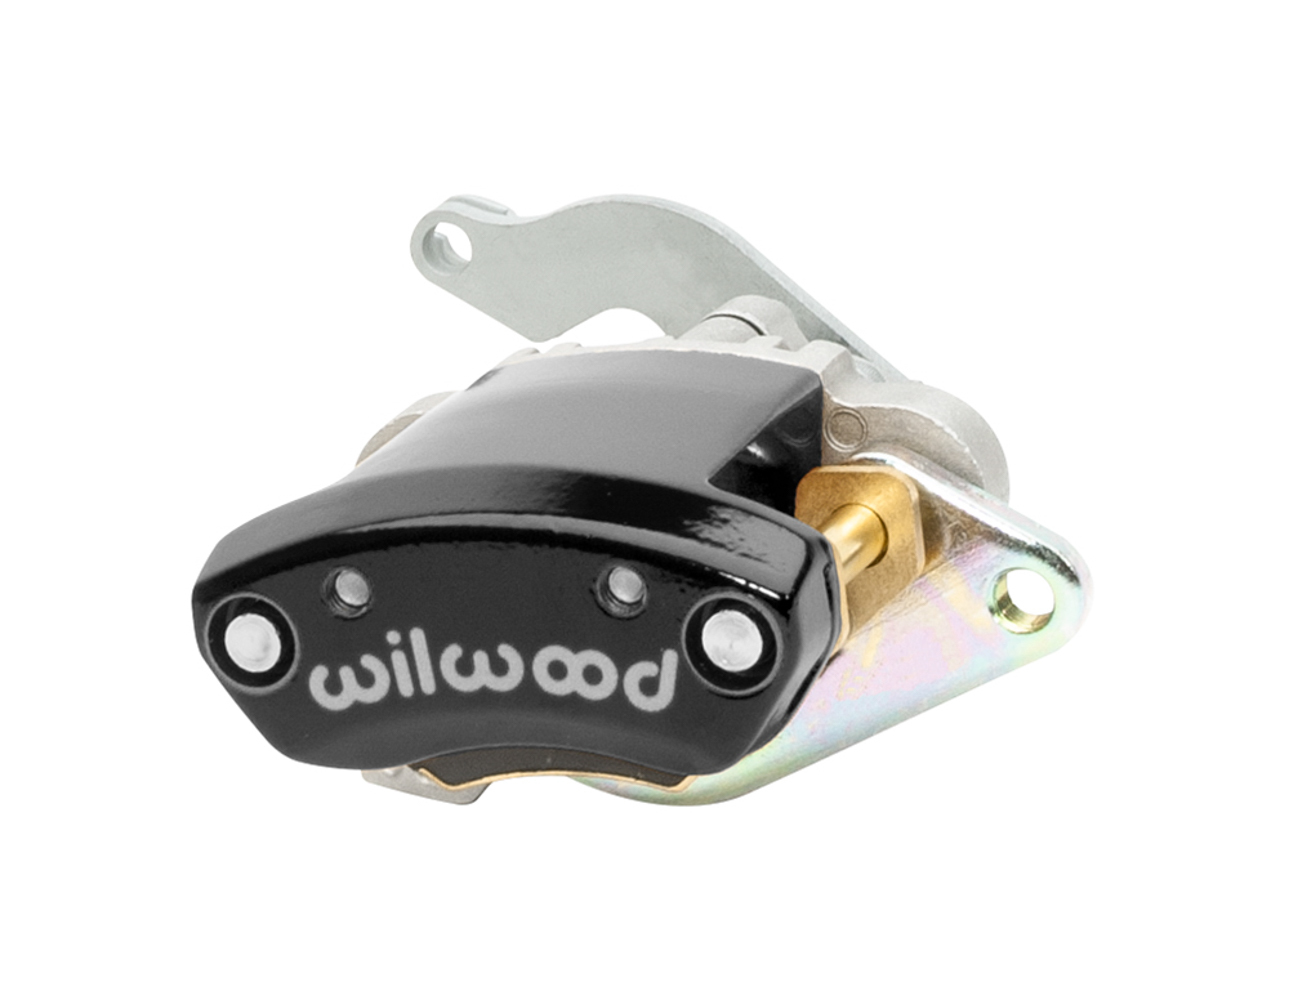 Wilwood 120-15485-BK Brake Caliper, MC4, Driver Side, Mechanical, Aluminum, Black Powder Coat, 12.88 in OD x 1.100 in Thick Rotor, 4.75 in Floating Mount, Each